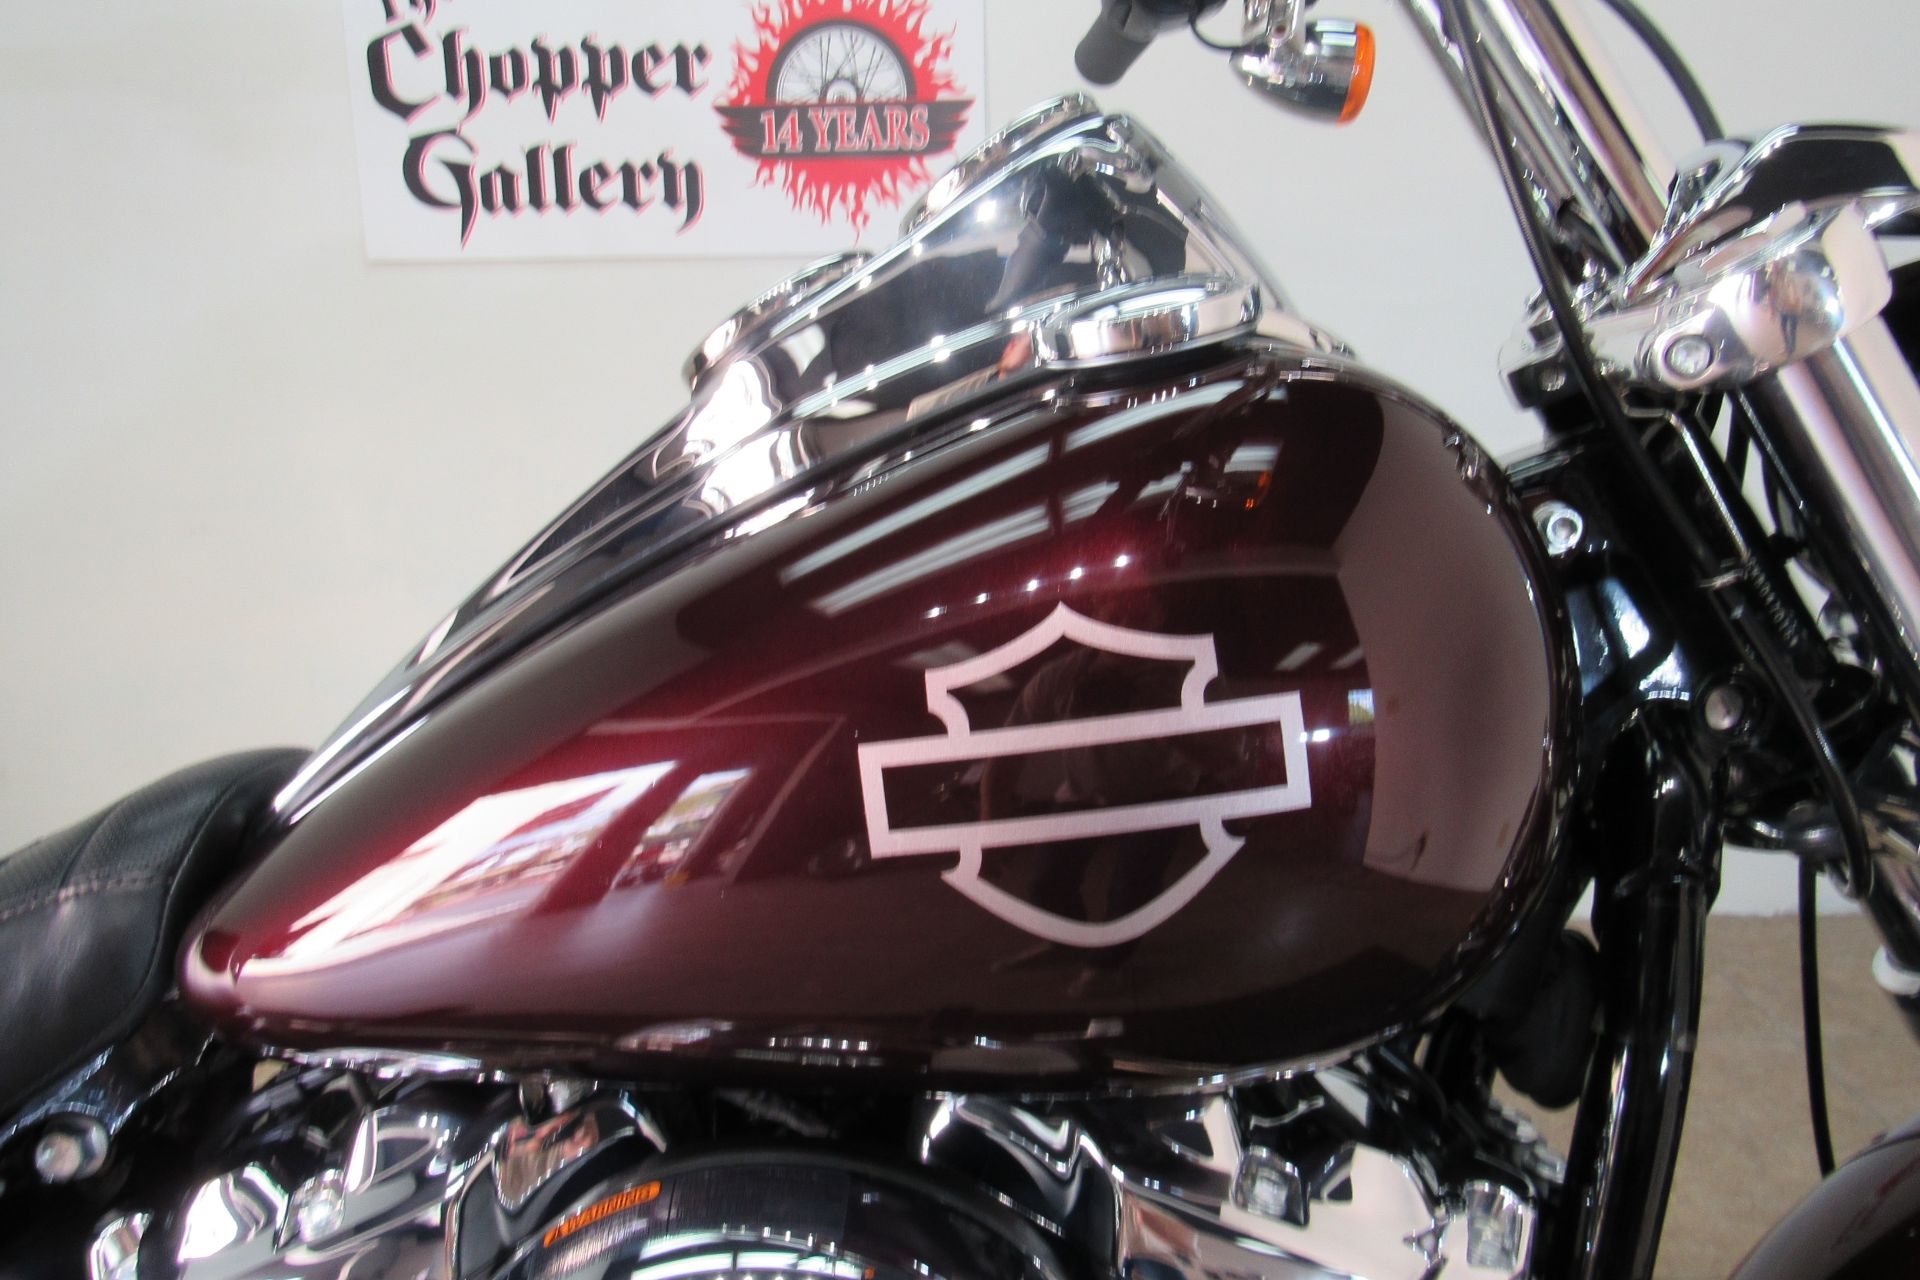 2019 Harley-Davidson Low Rider® in Temecula, California - Photo 7